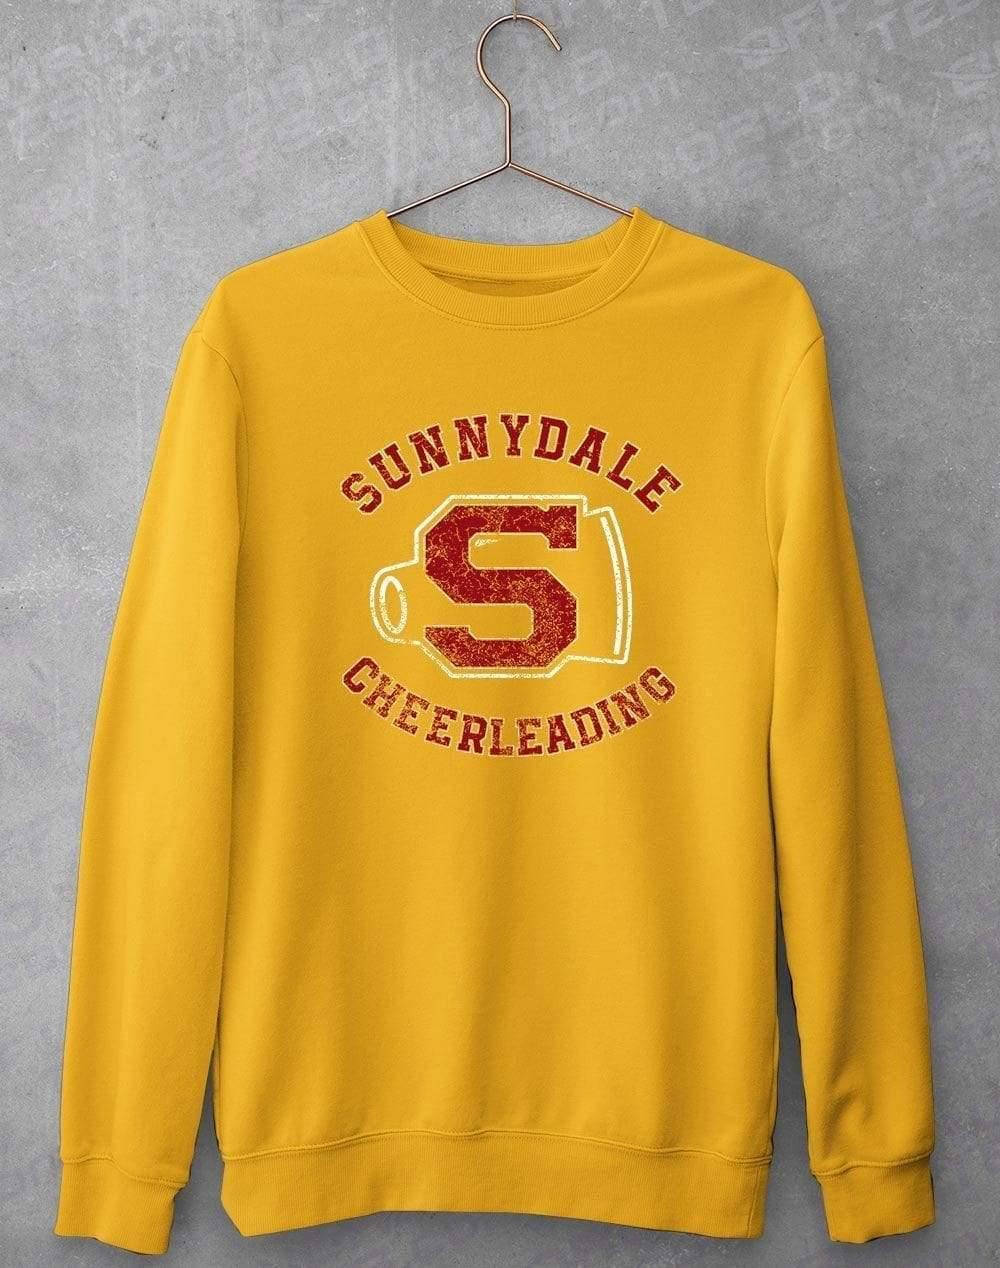 Sunnydale Cheerleading Distressed Sweatshirt S / Gold  - Off World Tees